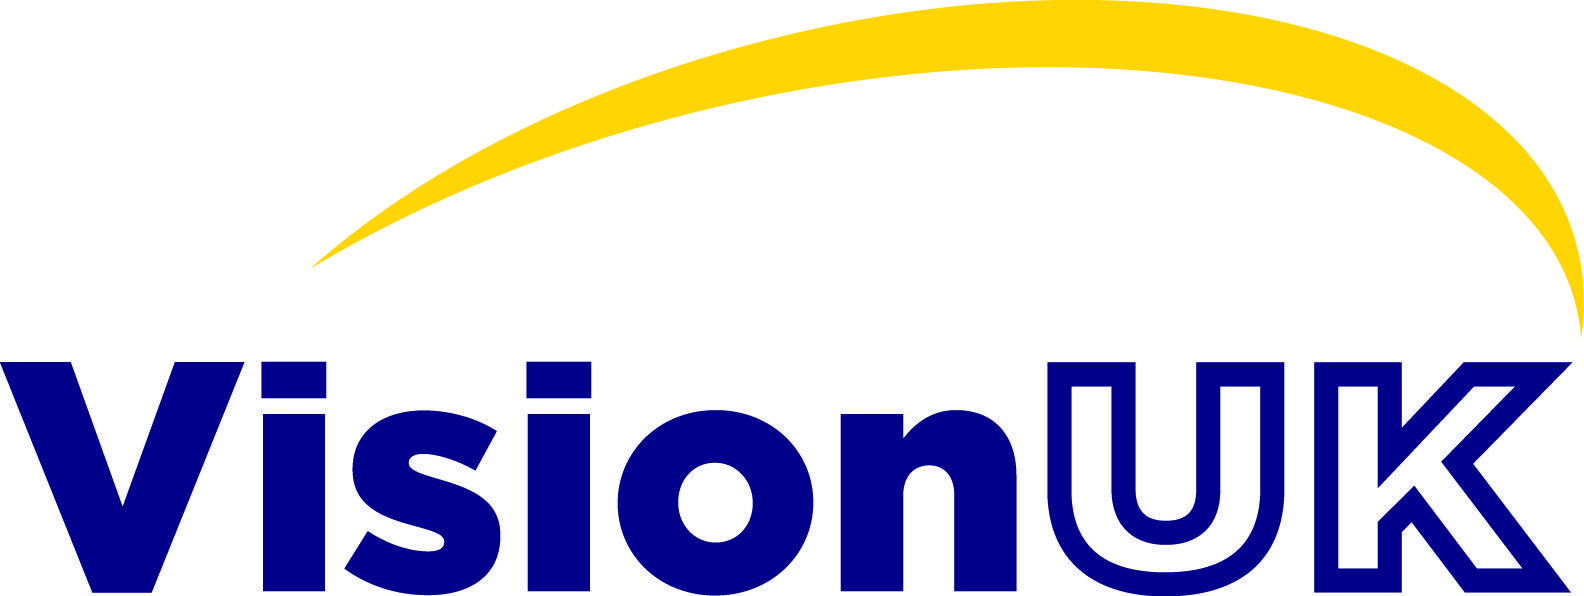 UK Logo - VISION UK